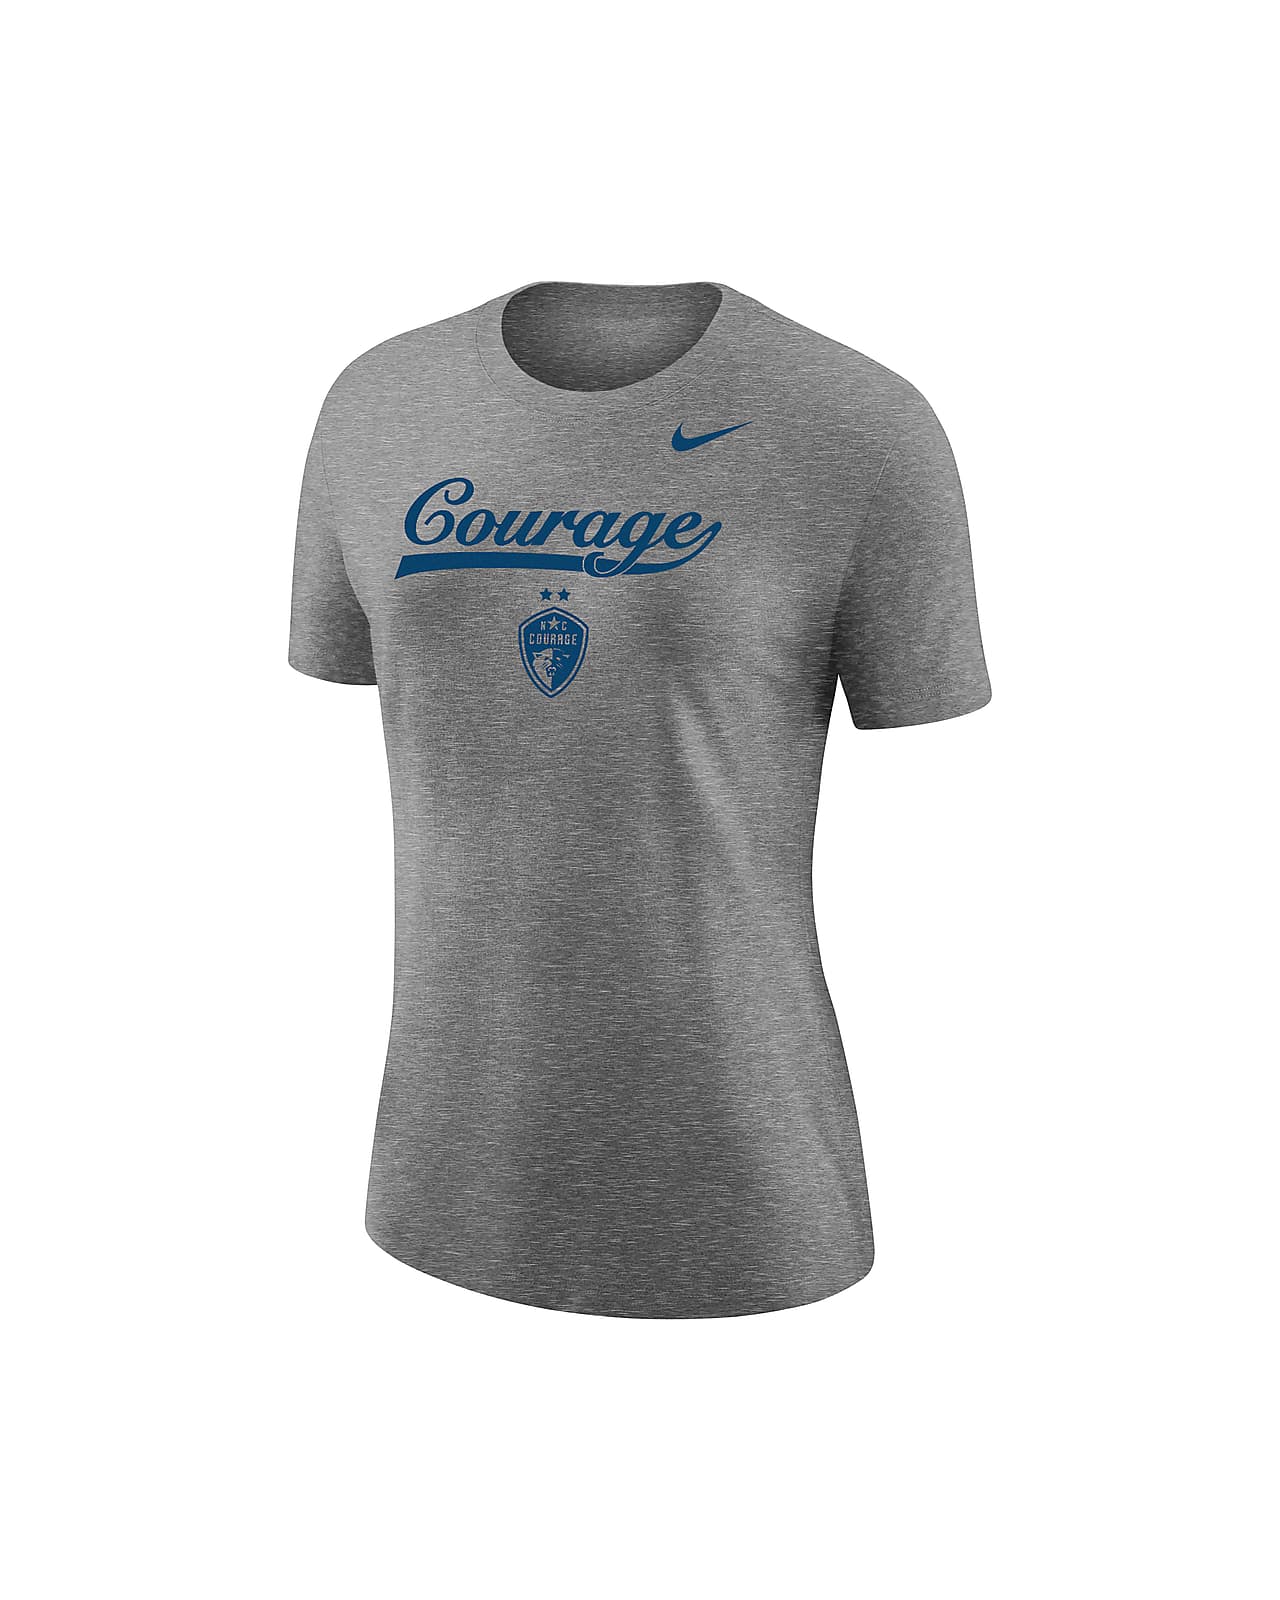 North Carolina Courage Women's Nike Soccer Varsity T-Shirt